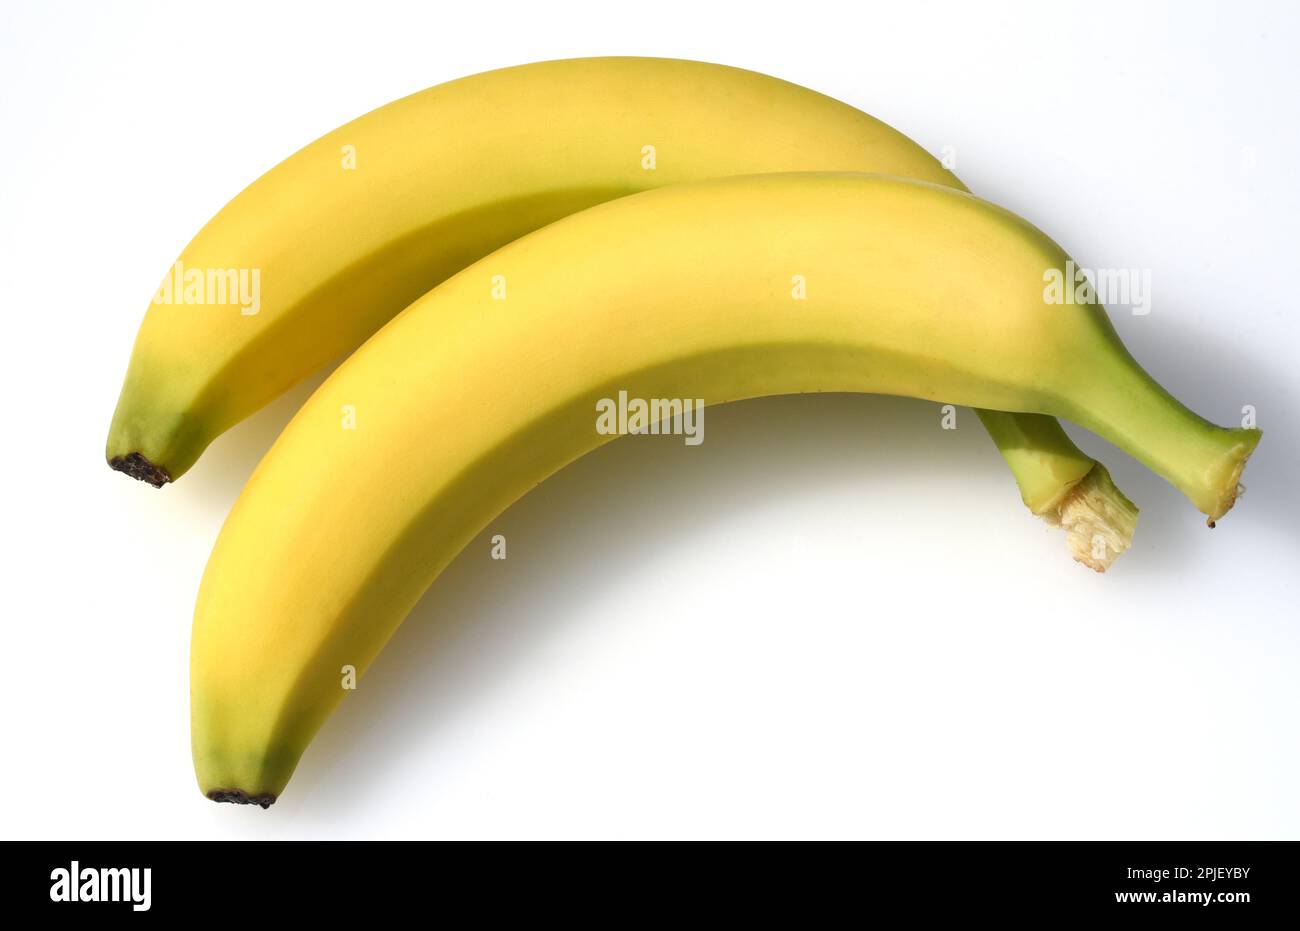 Bananen sind als Frucht botanisch gesehen Beeren, comme un fruit, les bananes sont des baies Banque D'Images